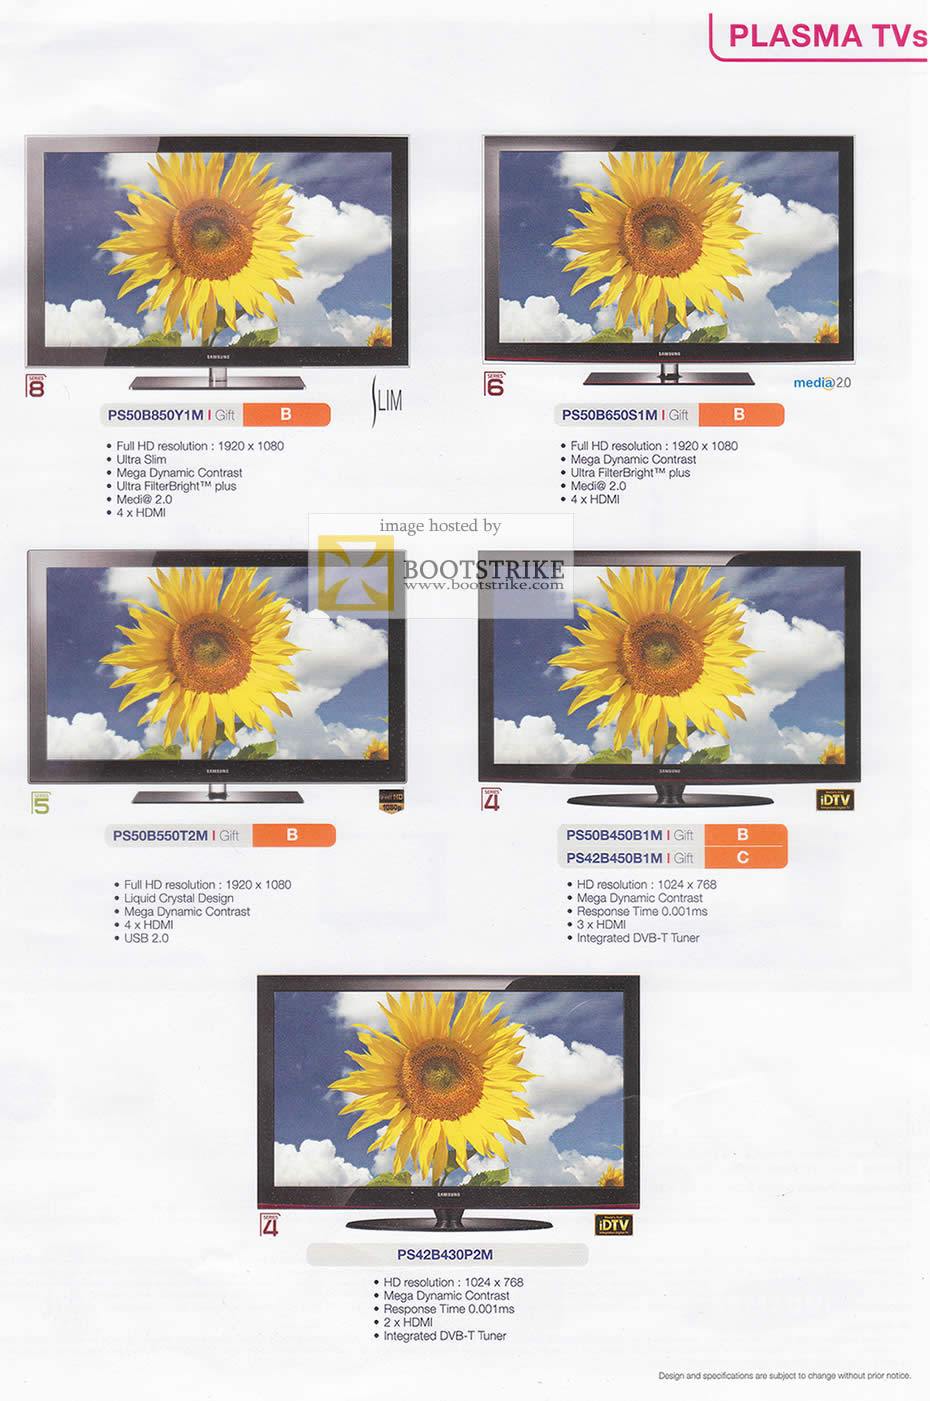 PC Show 2009 price list image brochure of Samsung Slim Plasma TVs Media 2.0 IDTV PS